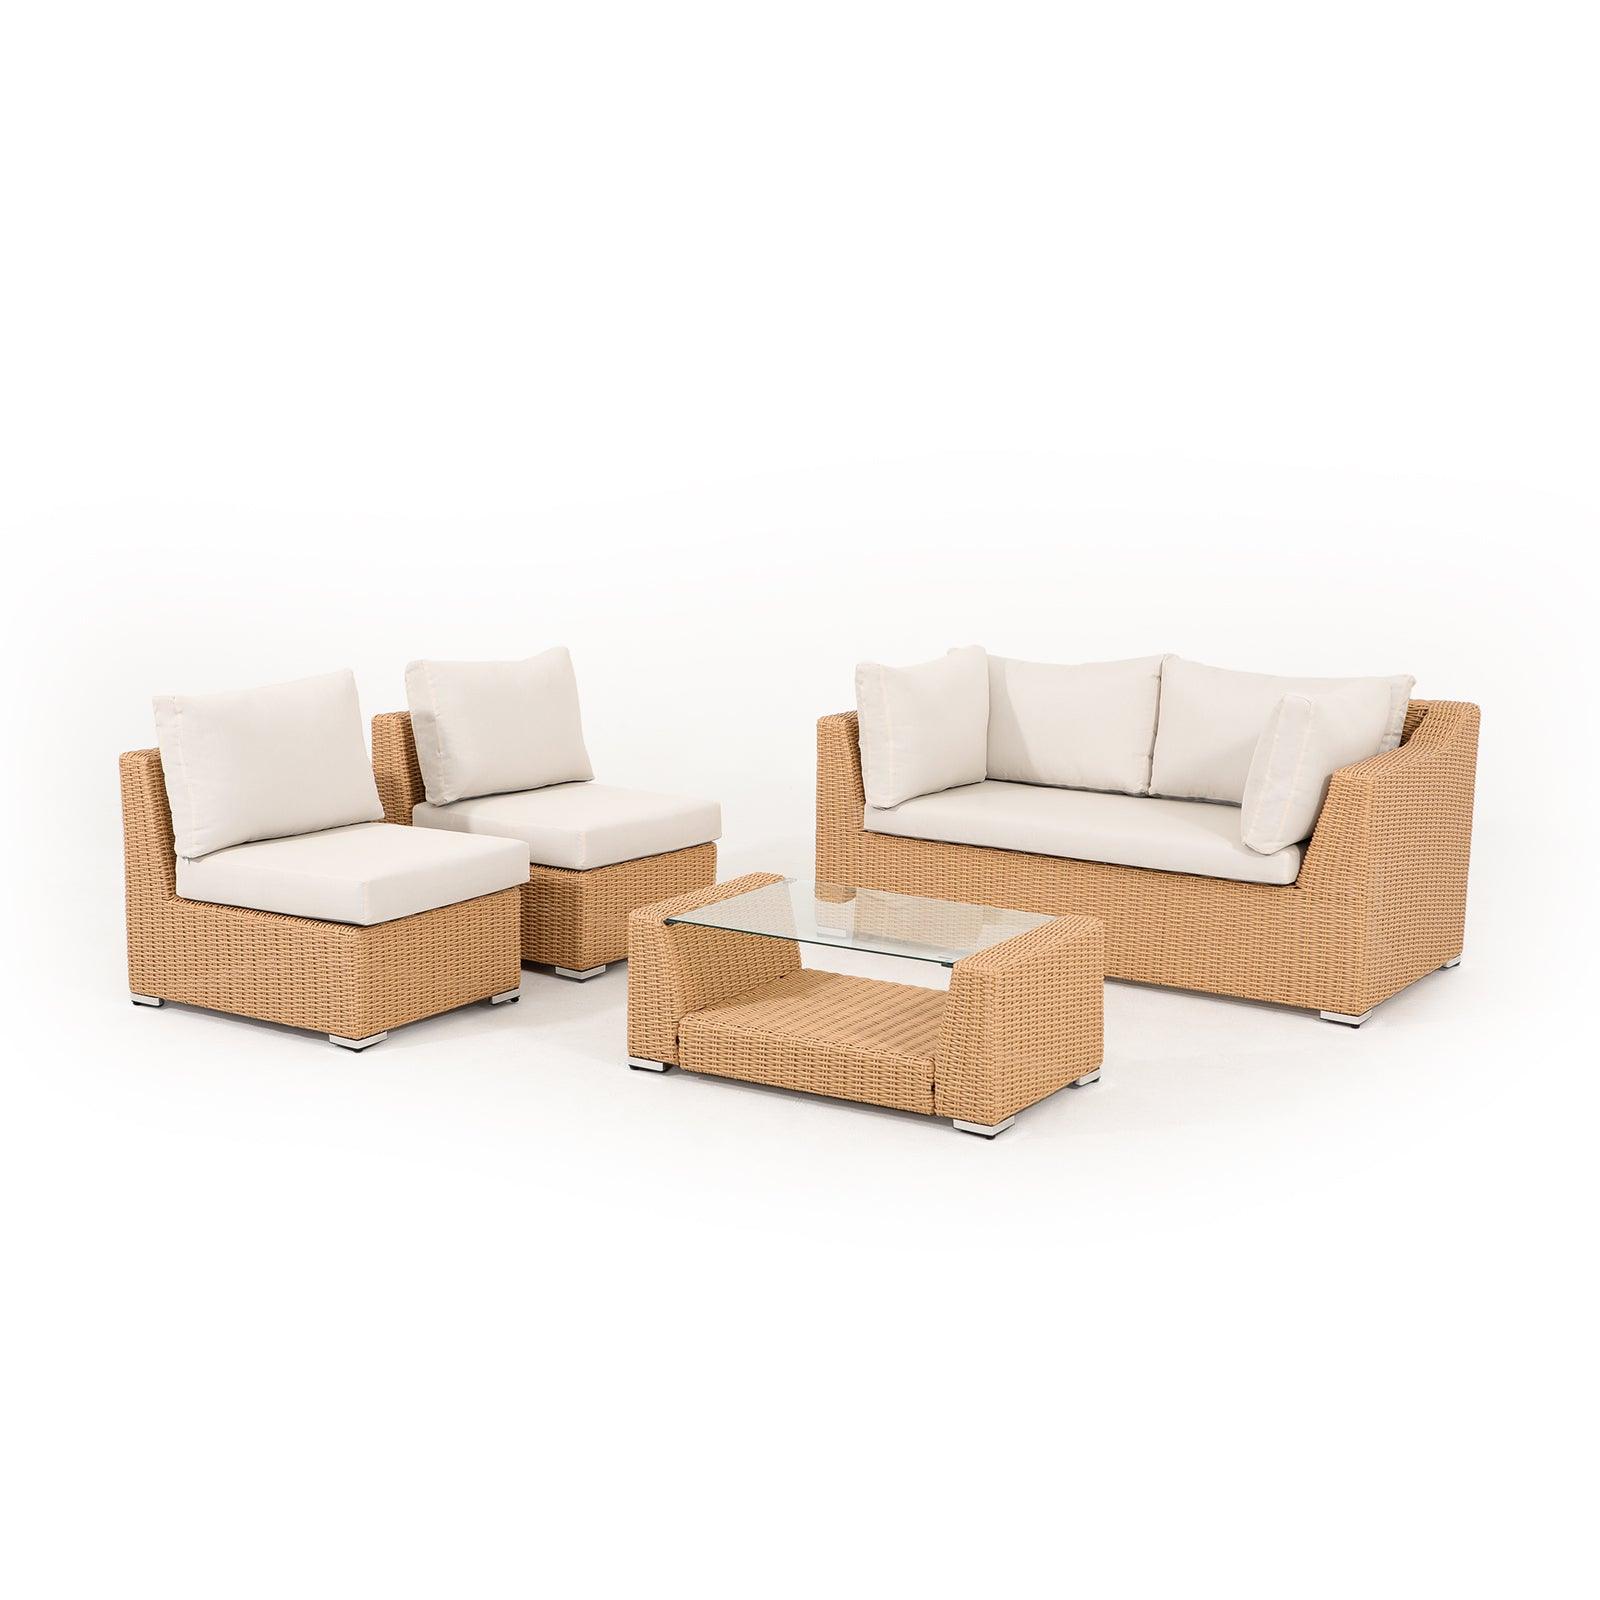 Elba natural color Sectional Rattan outdoor Sofa Set, Light beige cushions, 1 two-seater sofa, 2 Single Sofa, 1 table - Jardina Furniture - 2